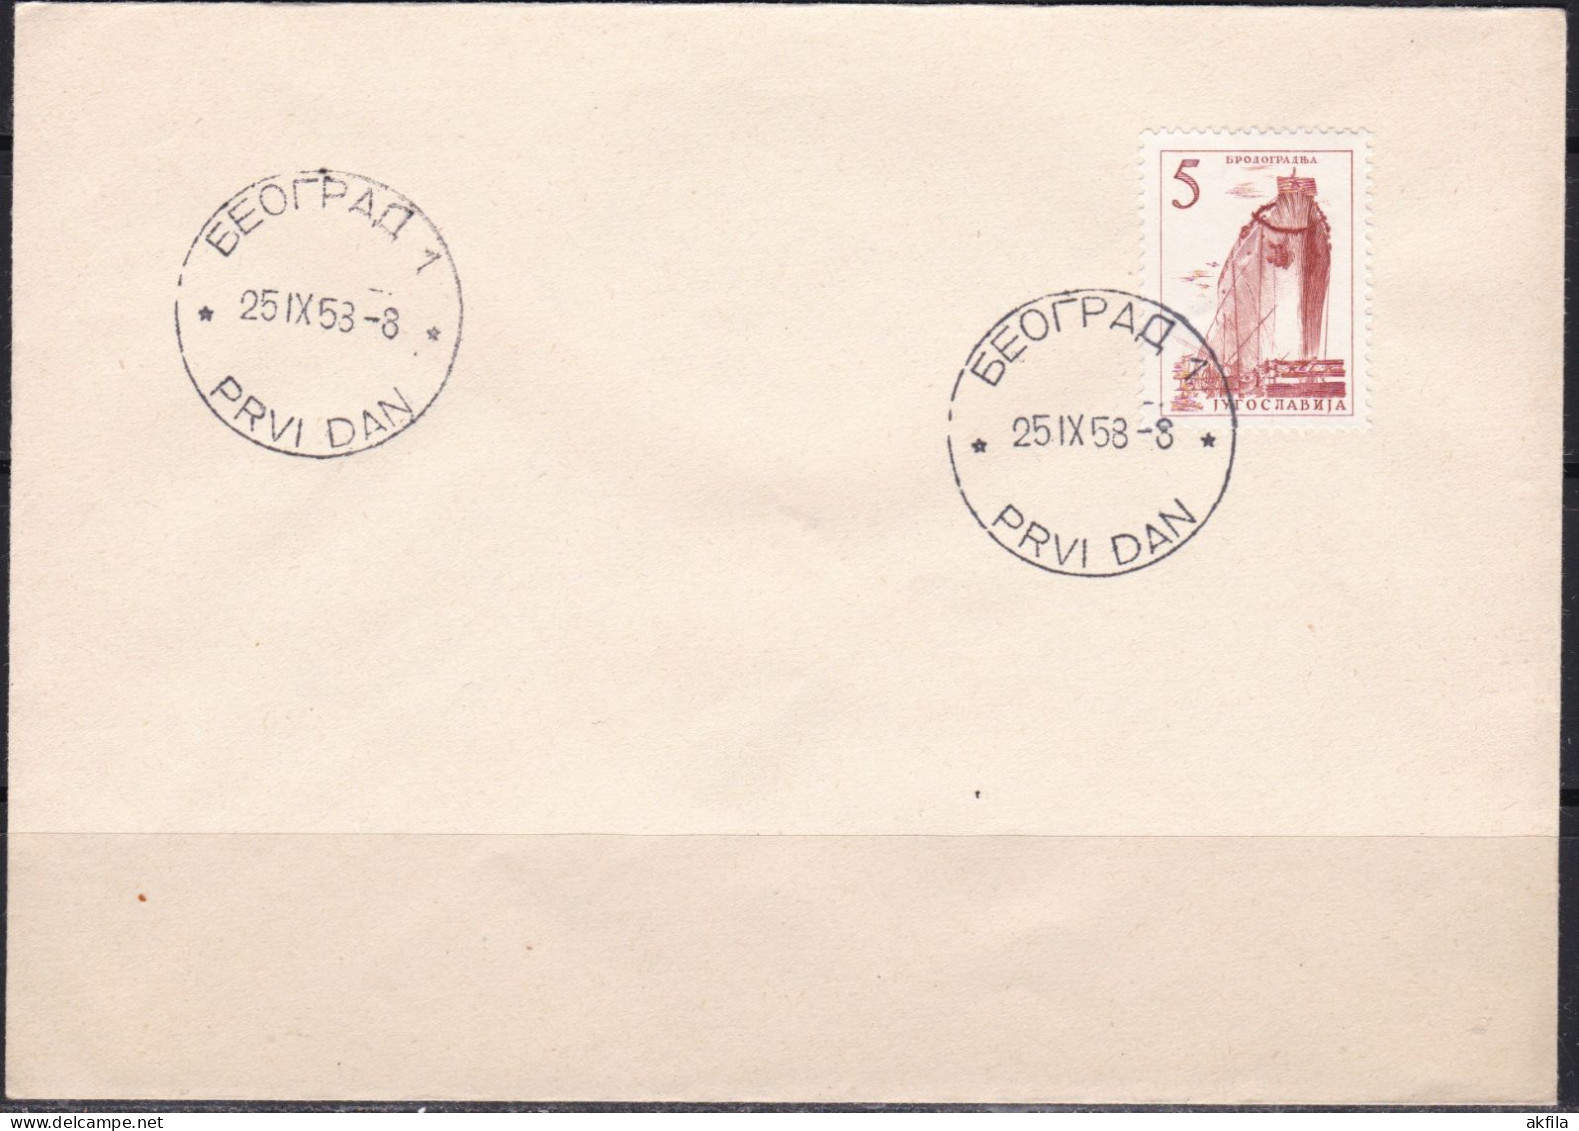 Yugoslavia 1958 Definitive Stamp FDC - FDC